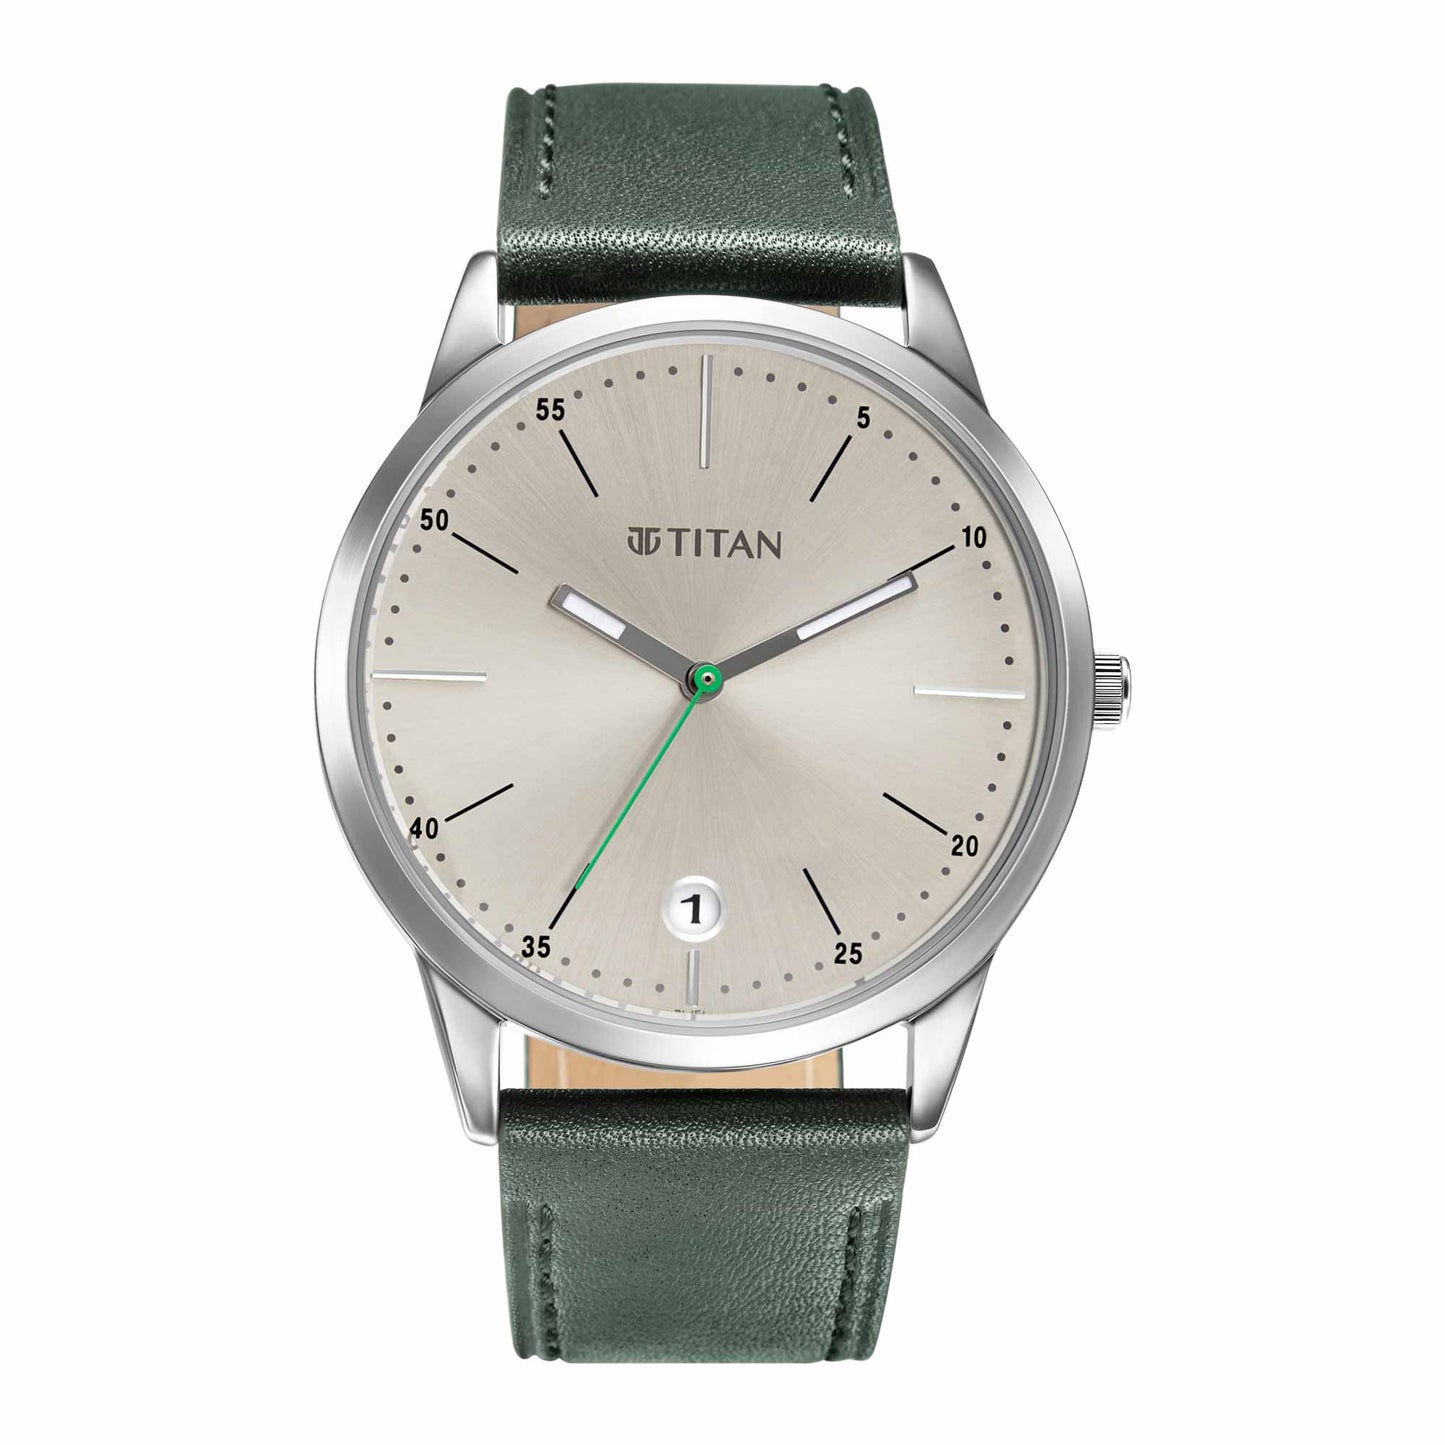 Titan Quartz Analog Leather Strap Watch for Men